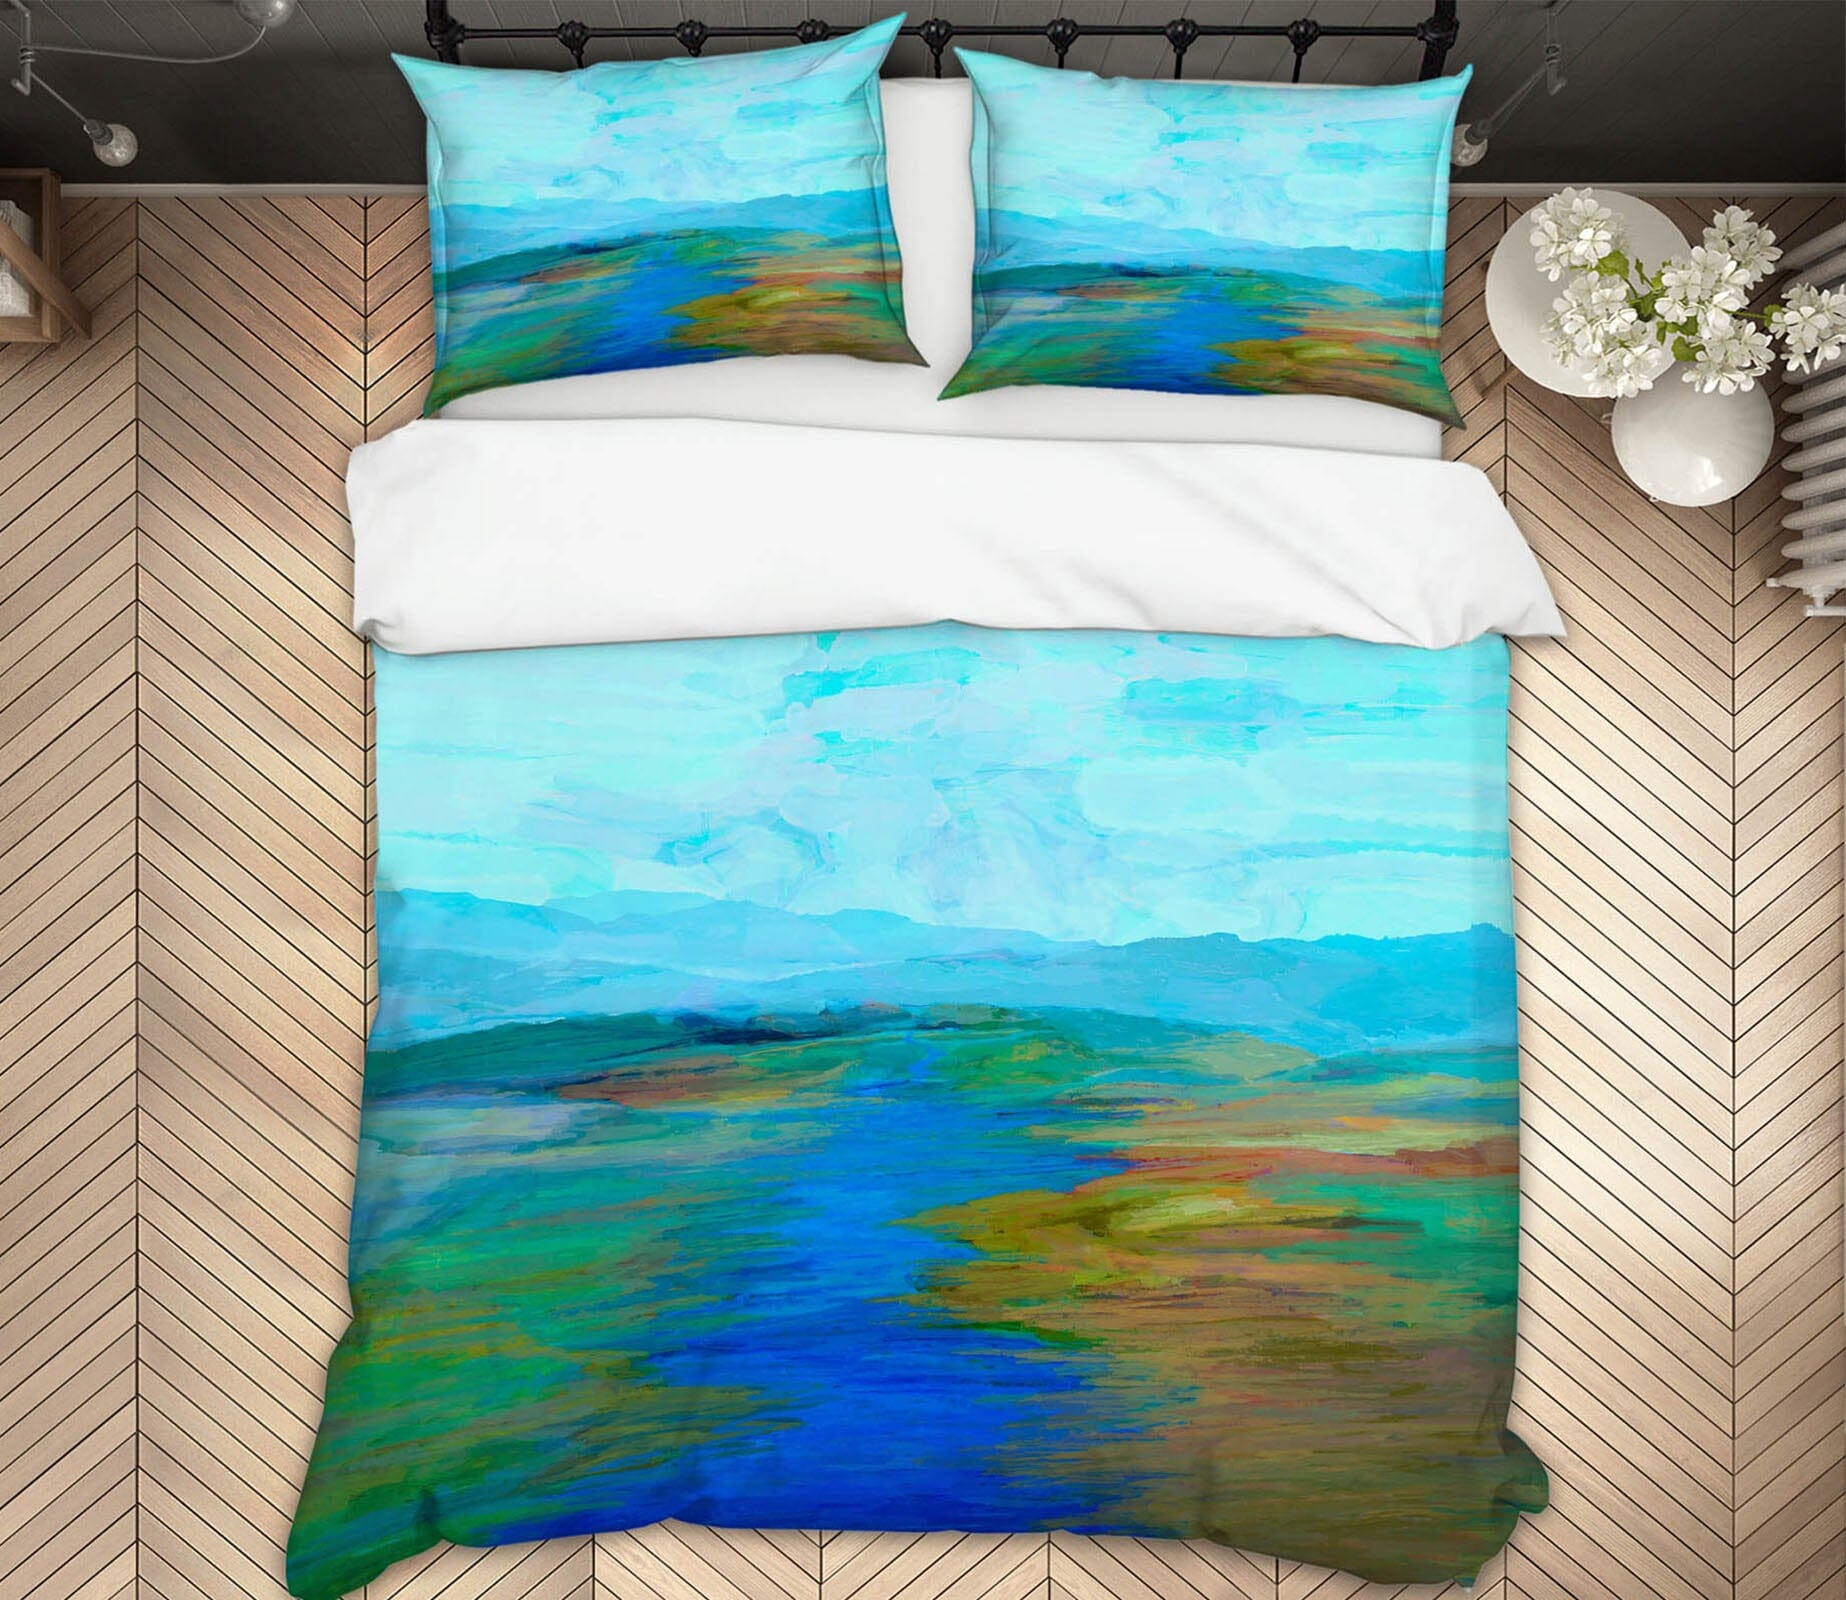 3D Undersea Channel 2114 Michael Tienhaara Bedding Bed Pillowcases Quilt Quiet Covers AJ Creativity Home 